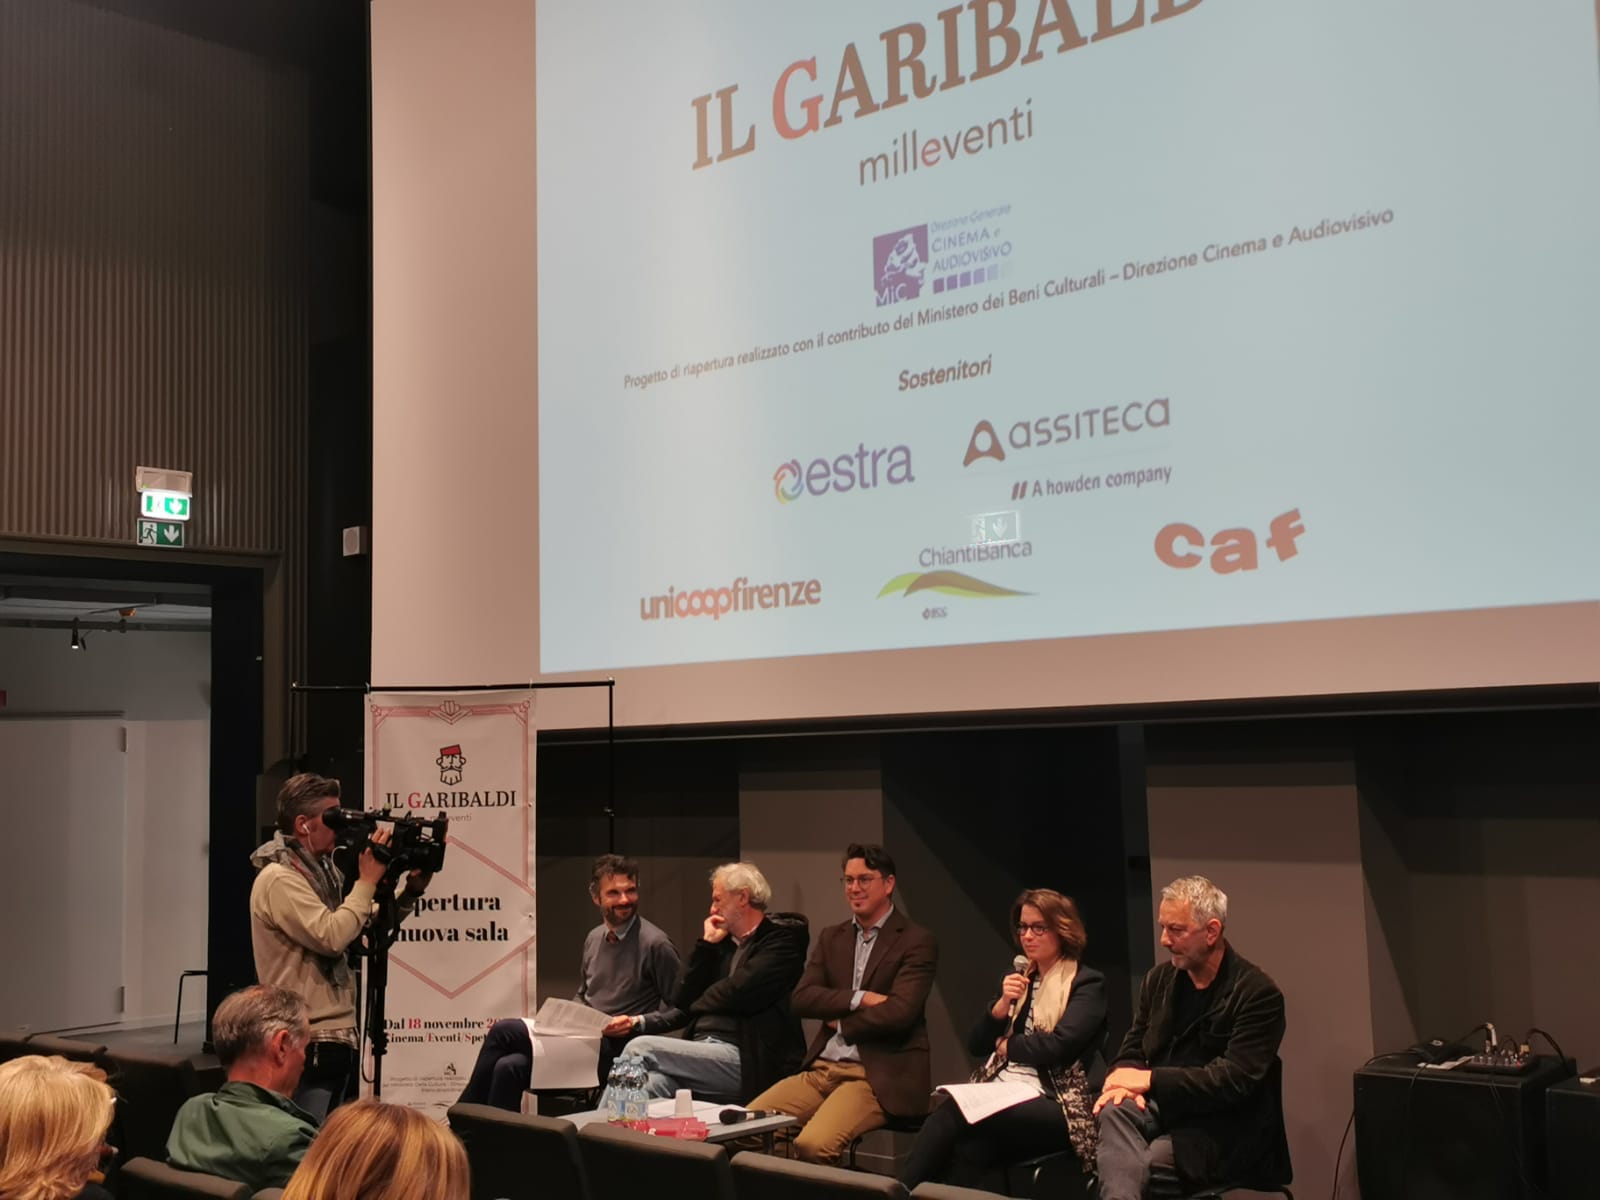 Il Garibaldi: from November 18 the new space in the heart of Prato